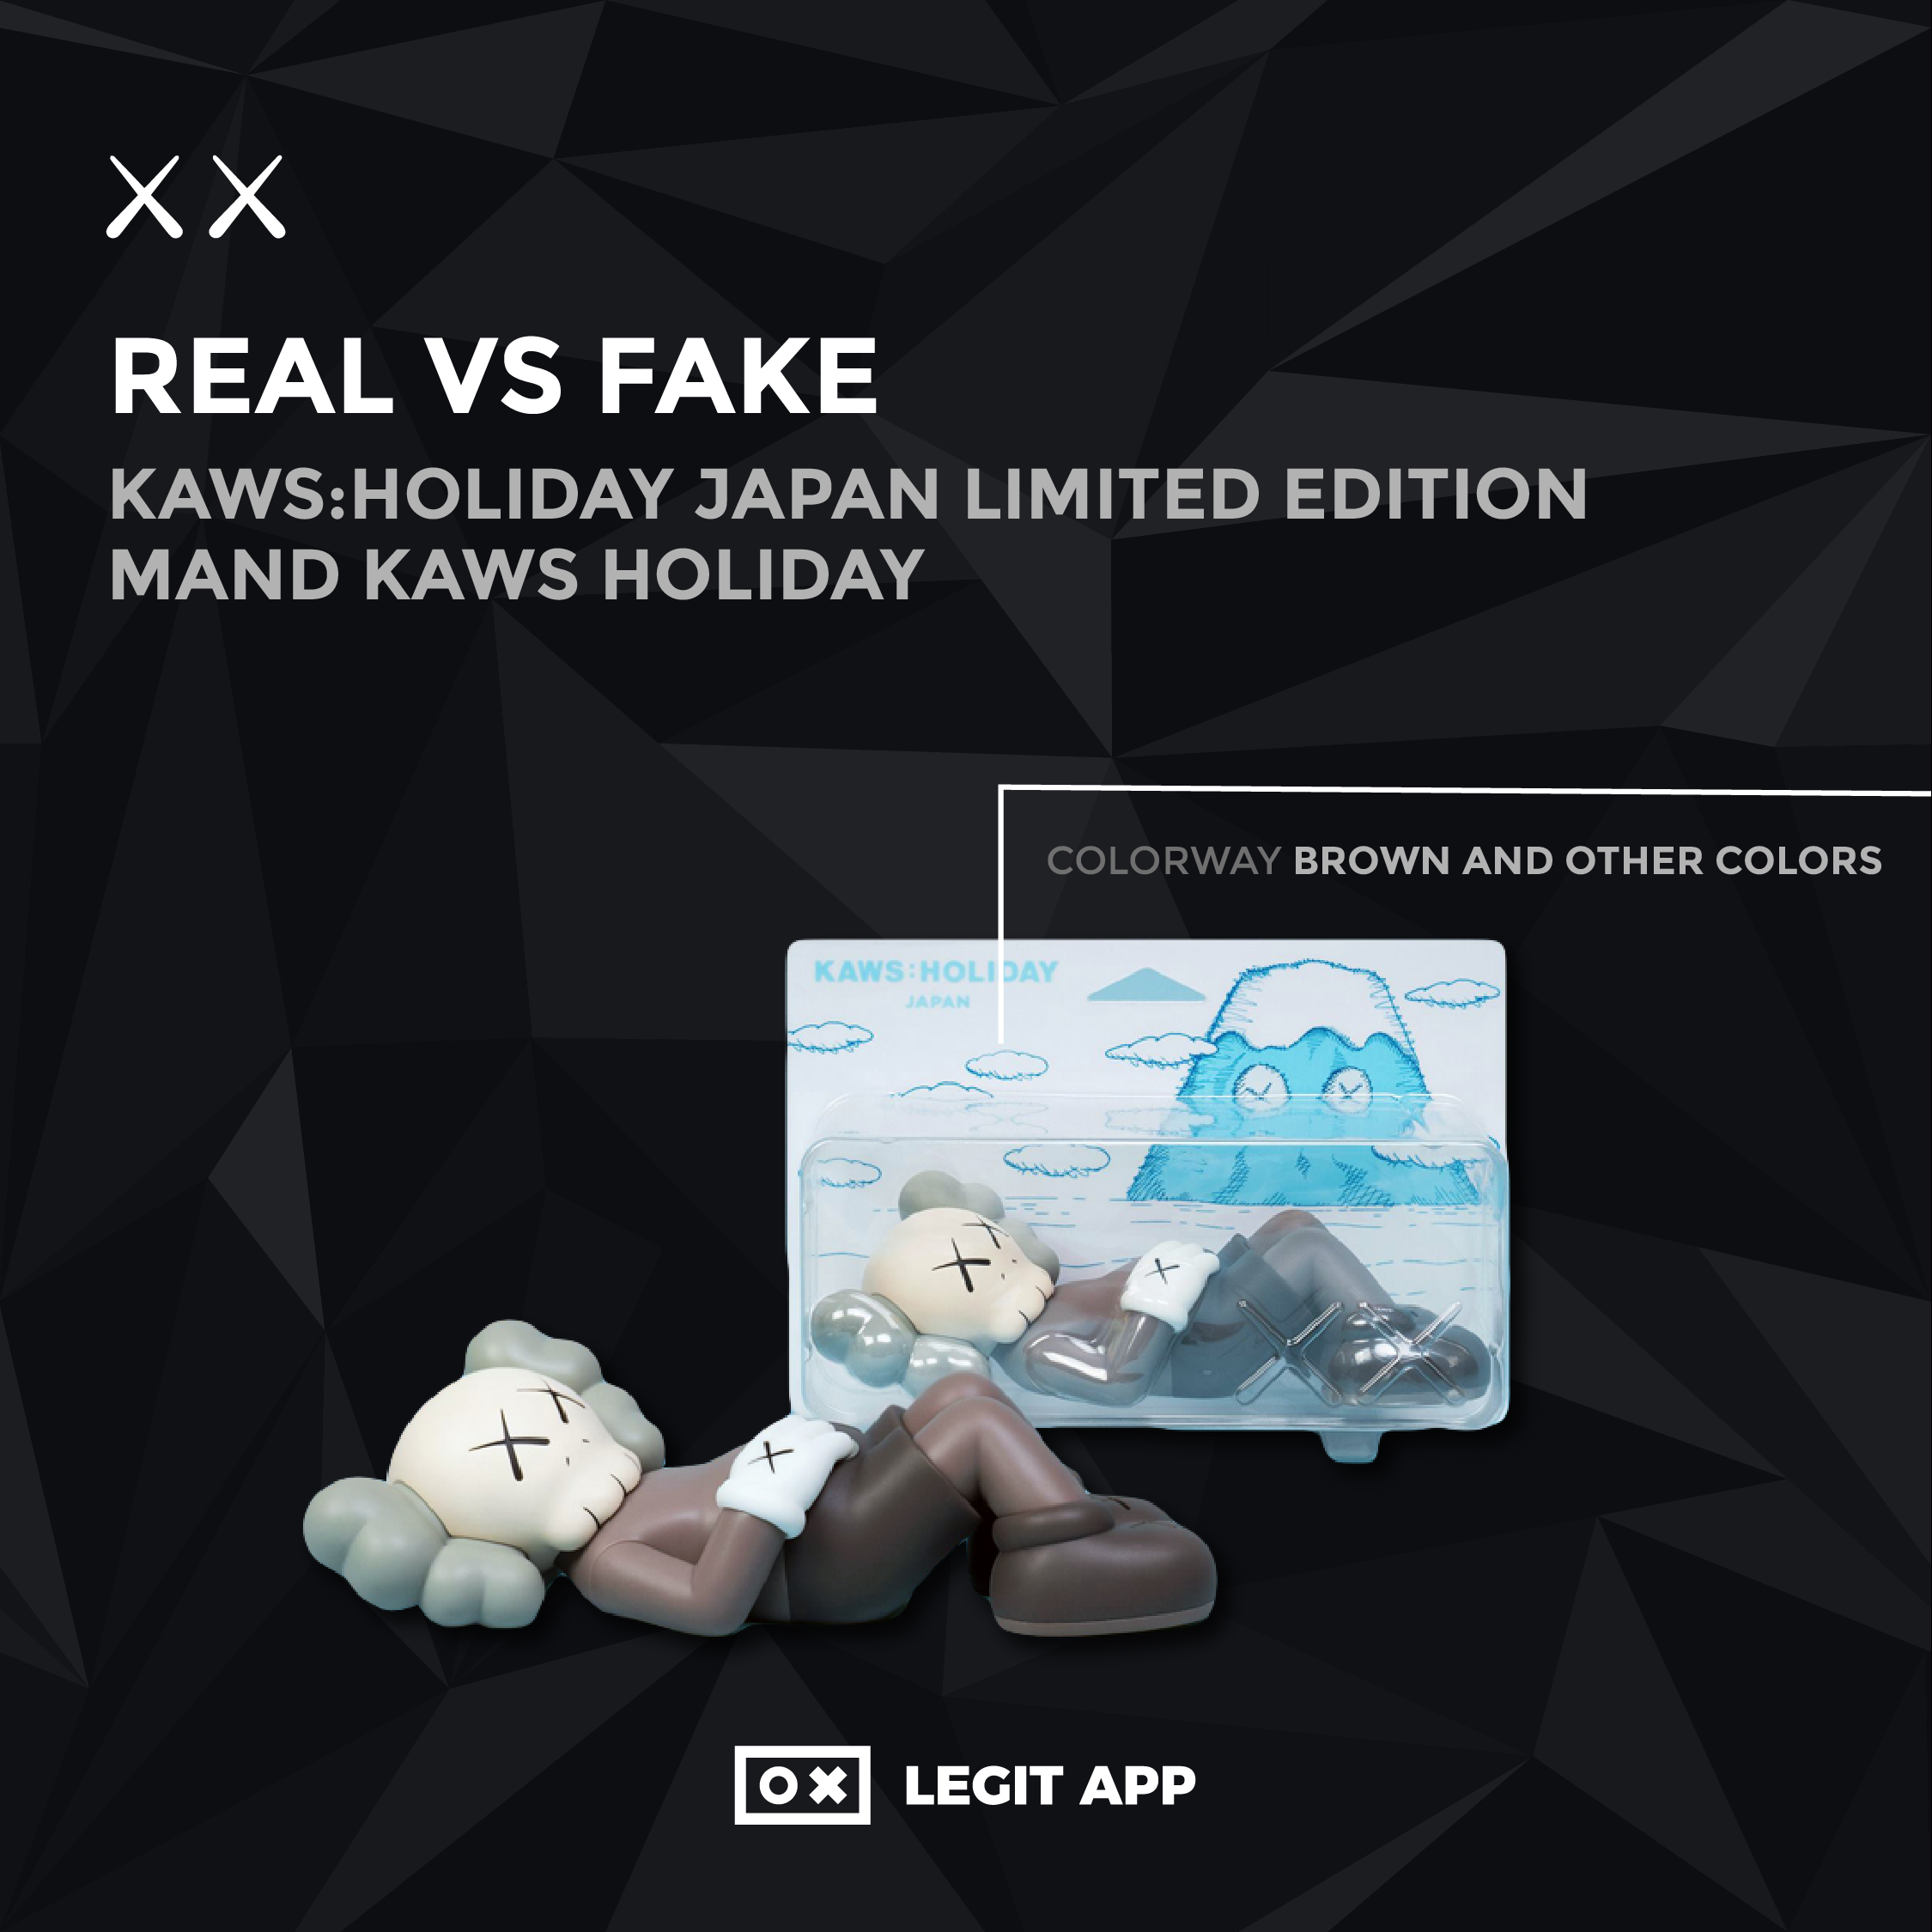 REAL VS REPLICA - KAWS: Holiday Japan Limited Edition mand kaws